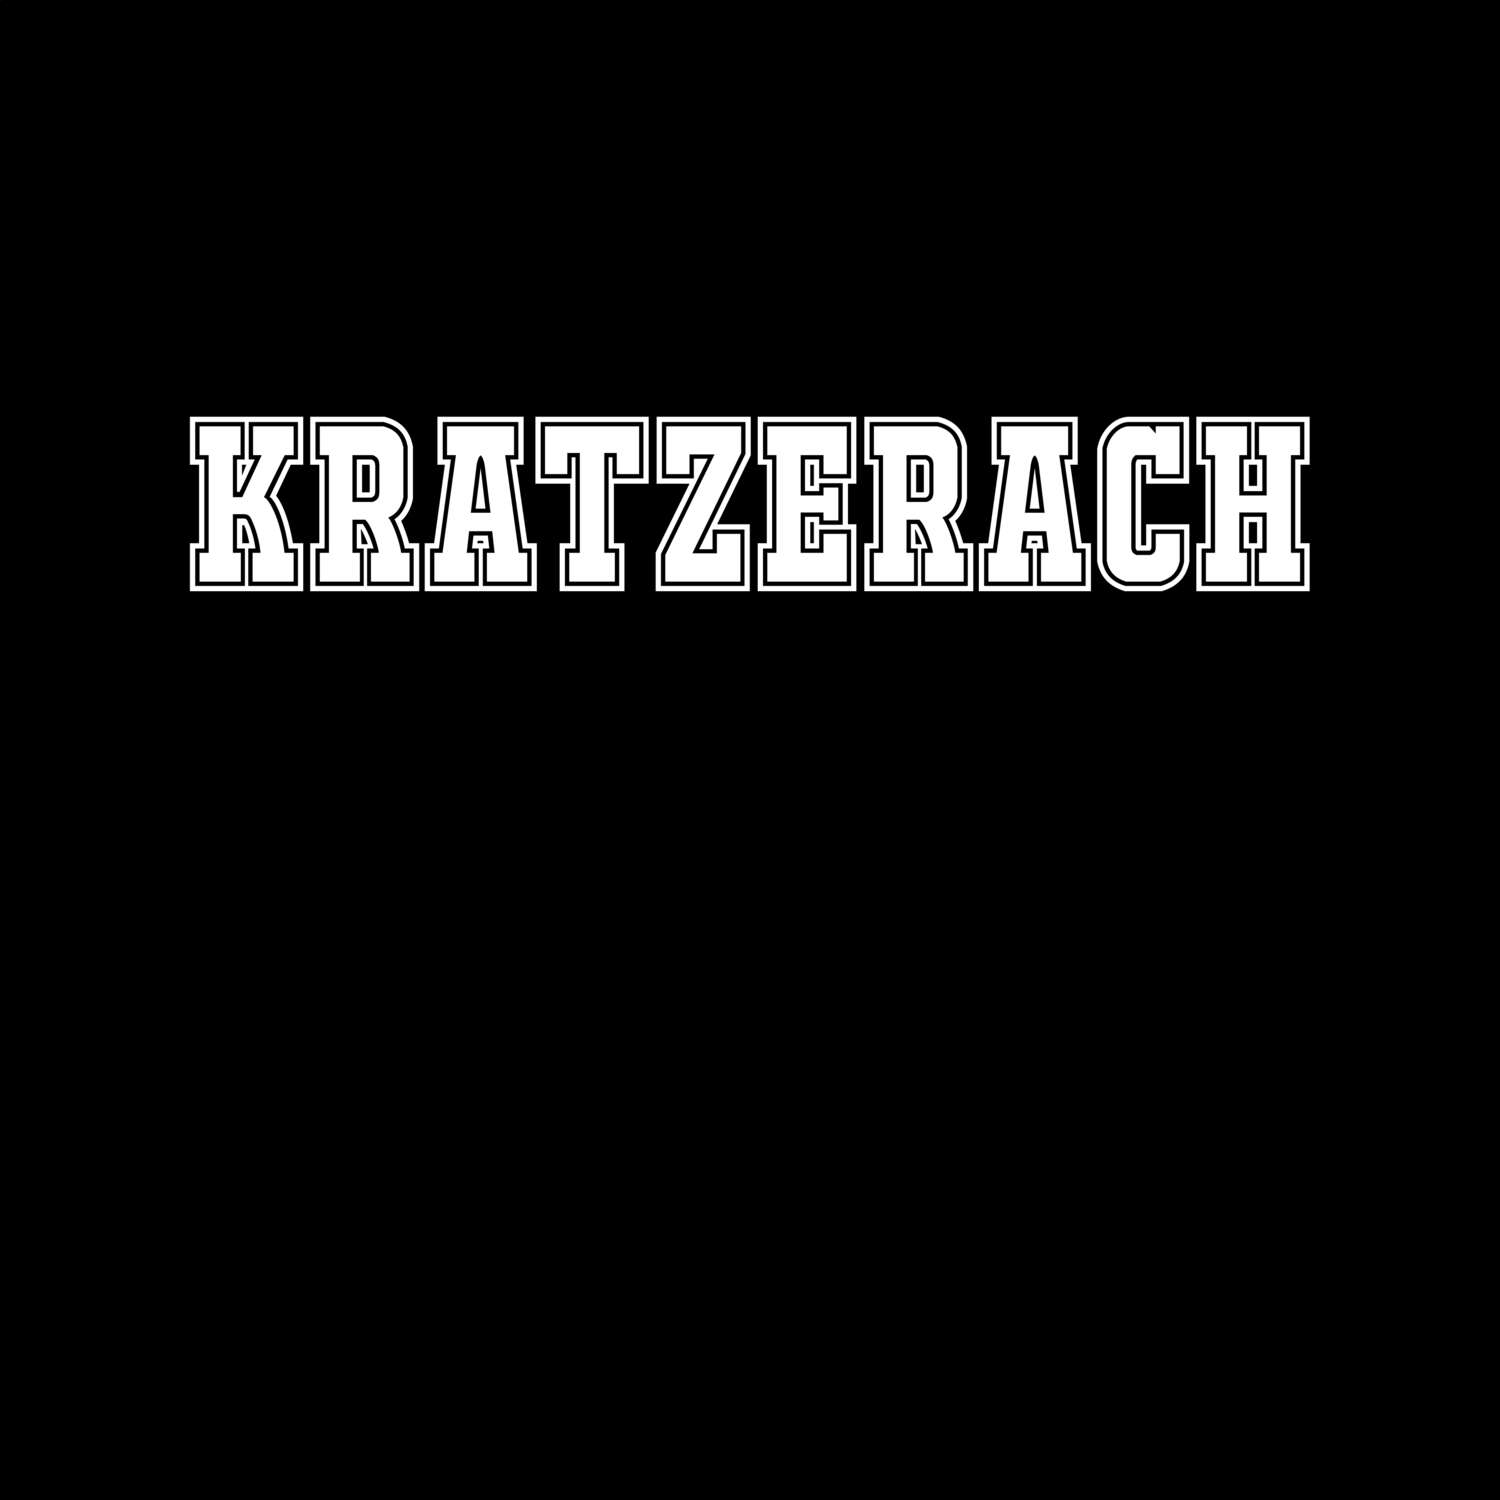 Kratzerach T-Shirt »Classic«